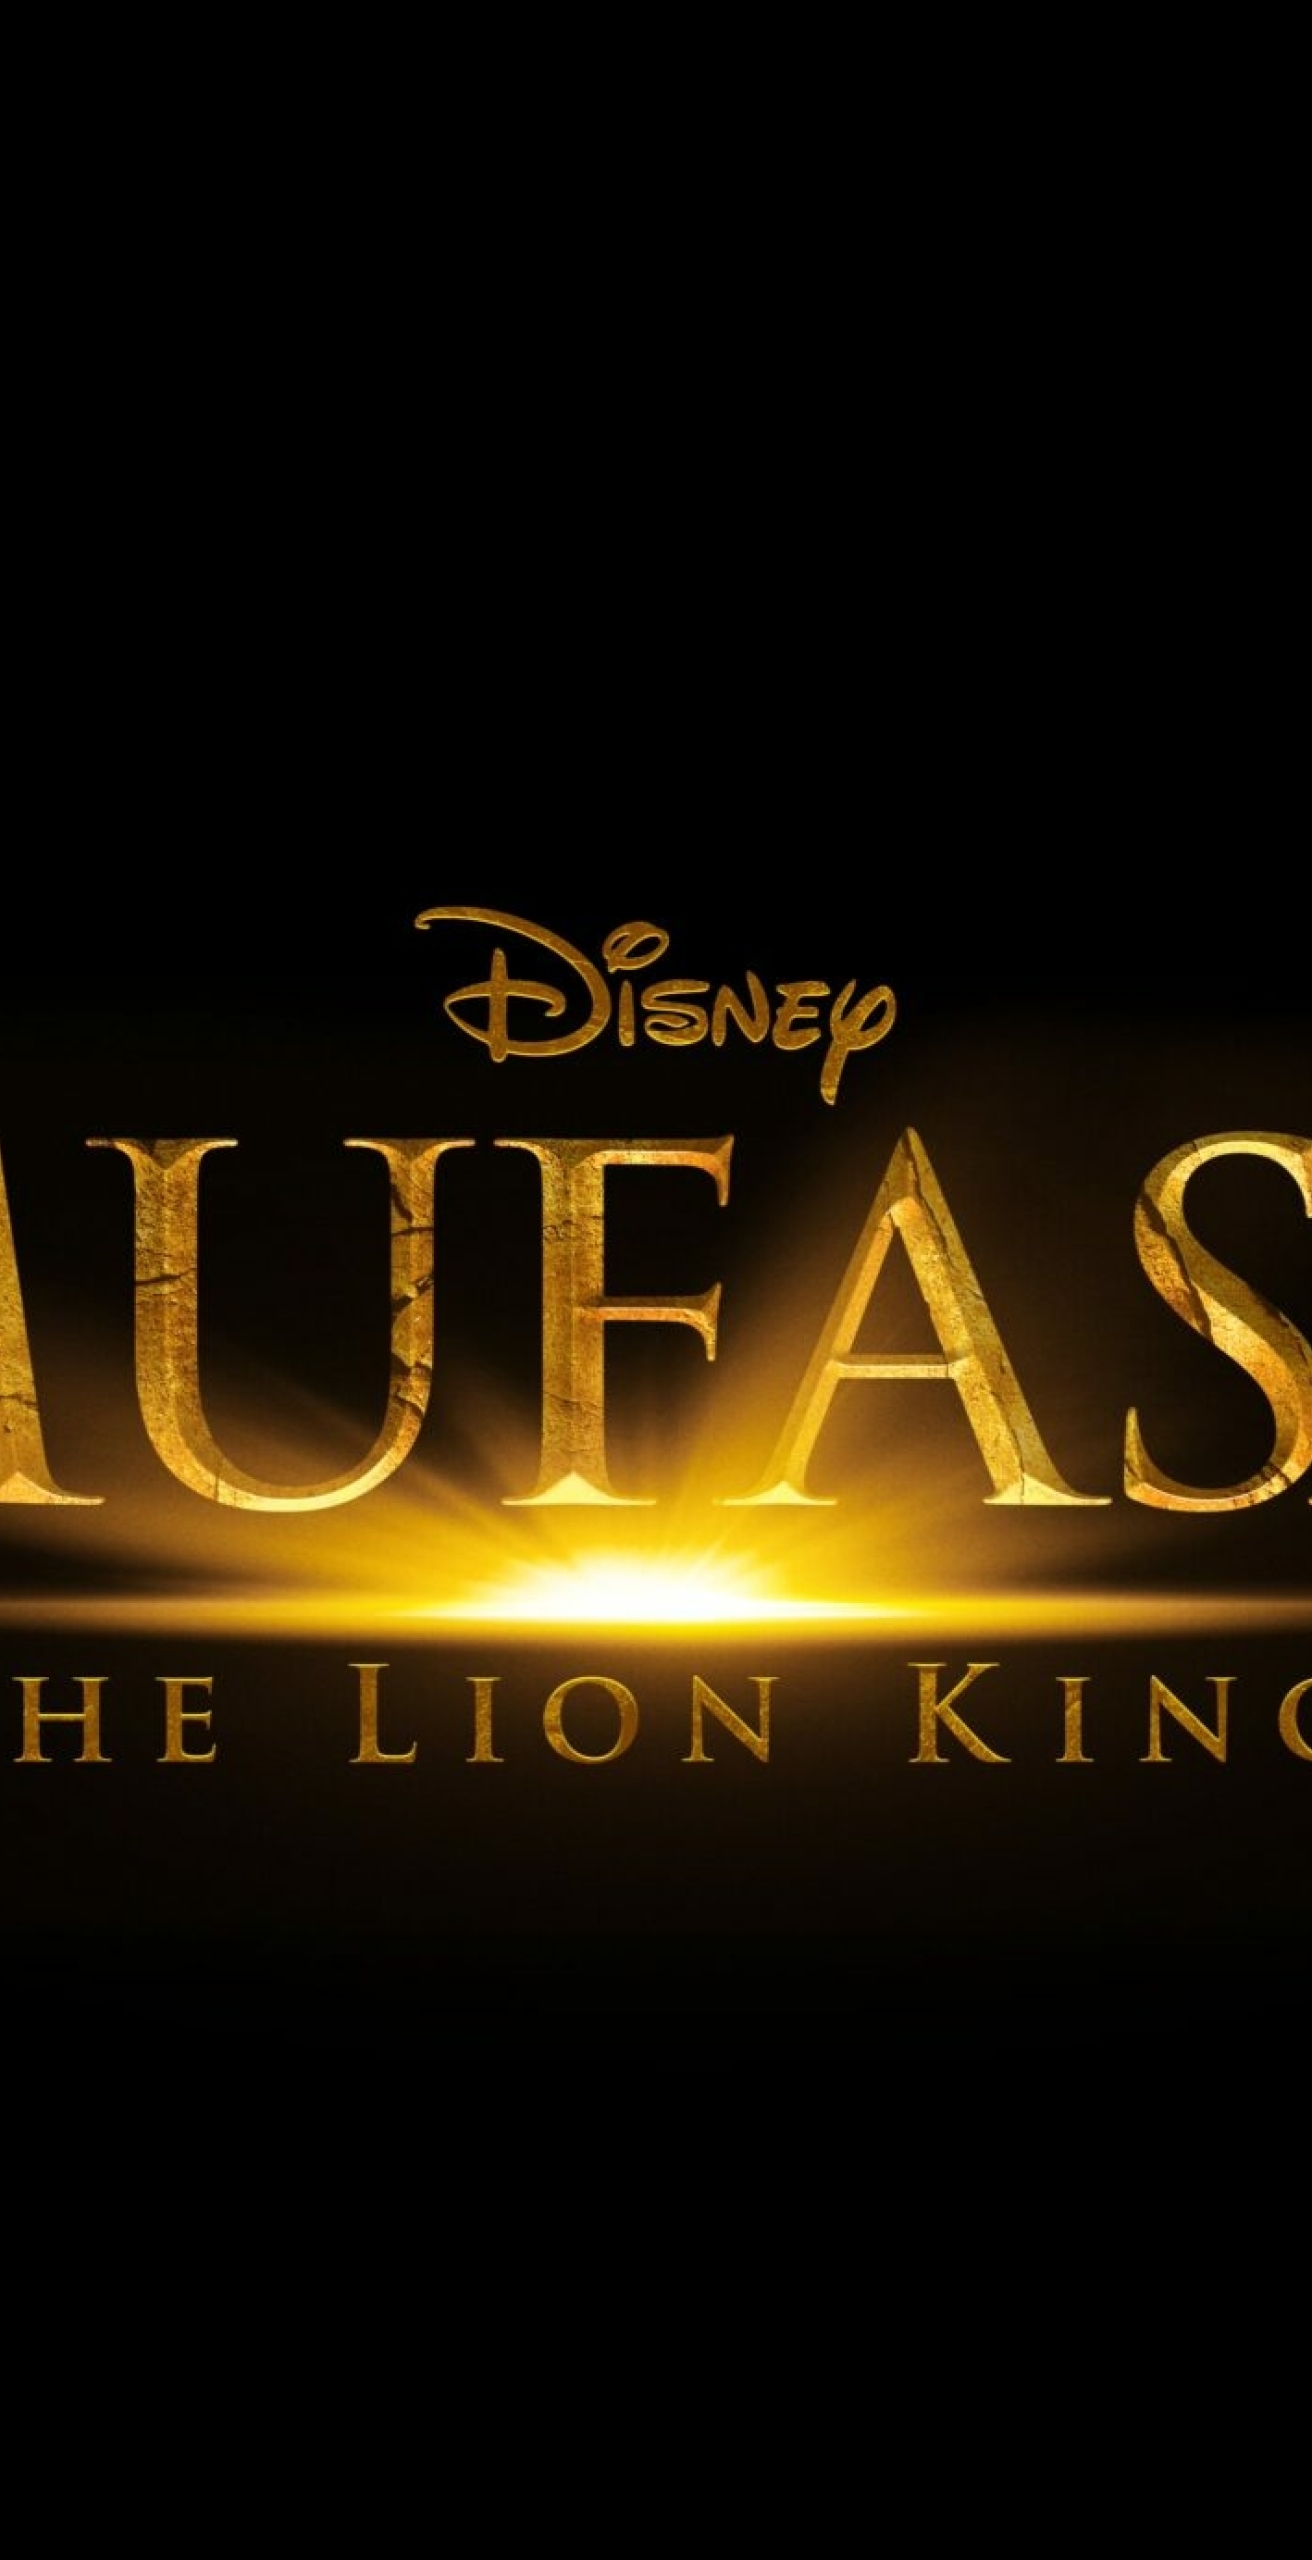 1312x2560 Mufasa The Lion king Disney Poster 1312x2560 Resolution